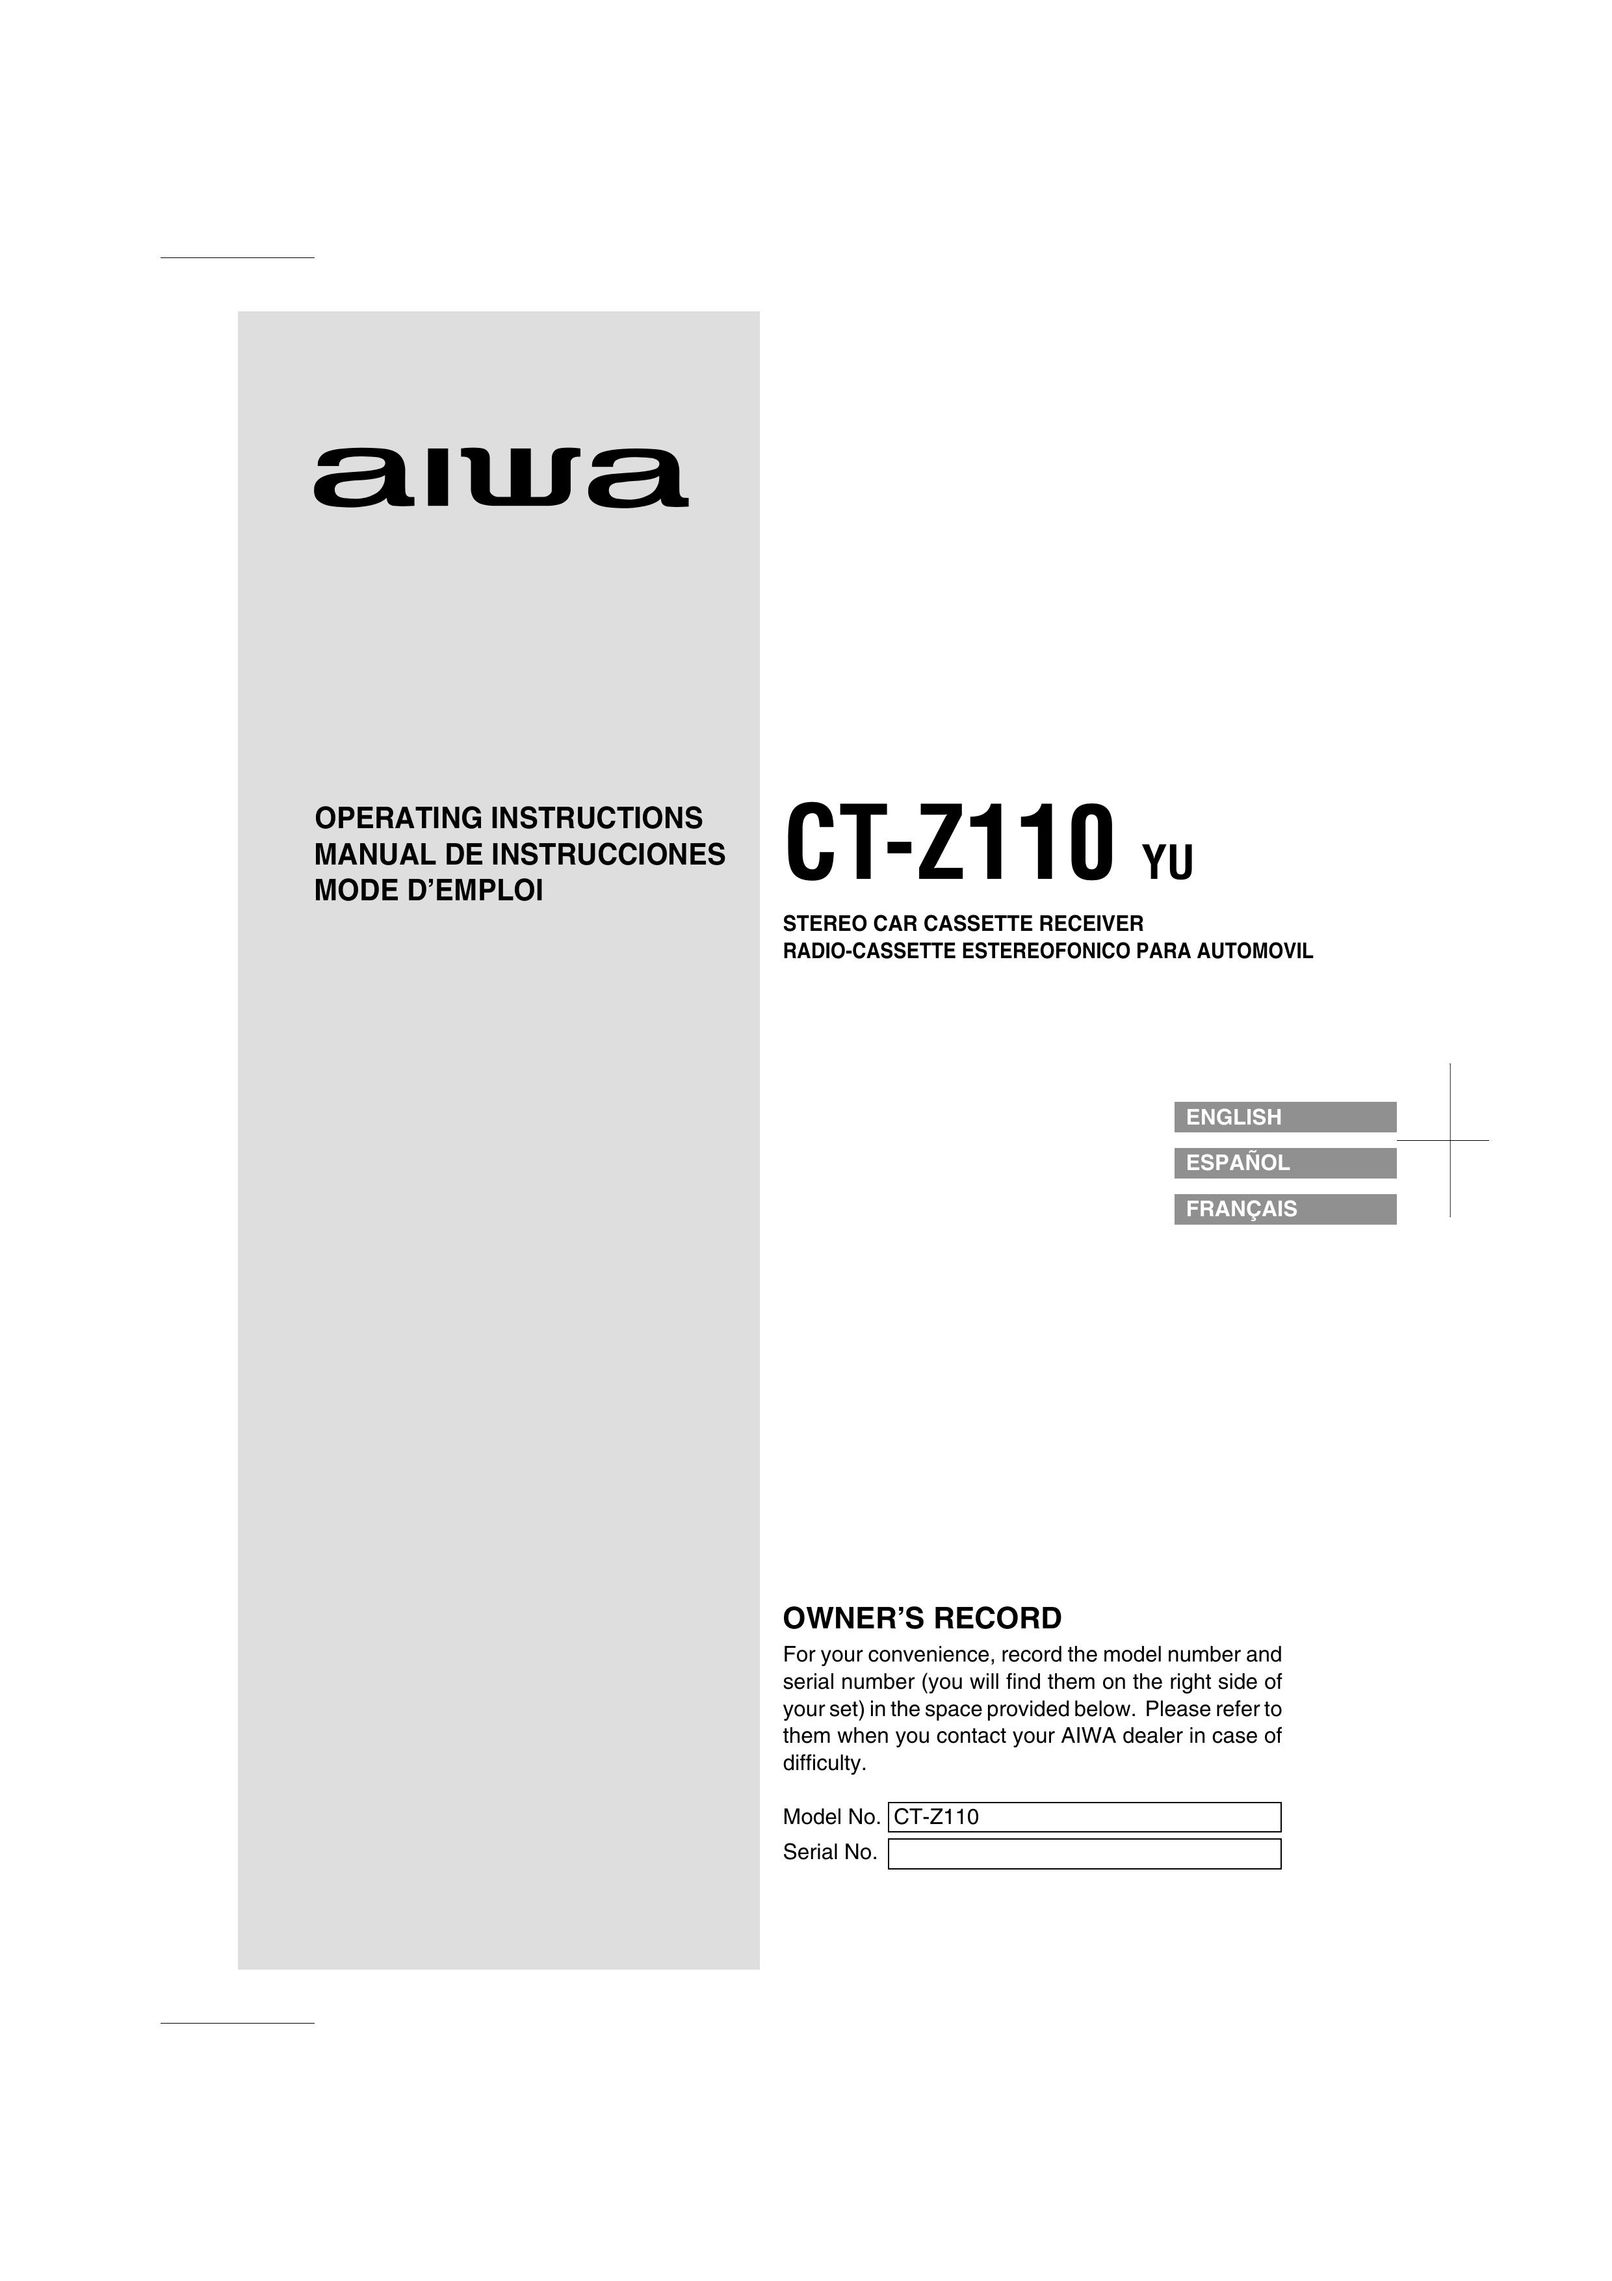 Aiwa CT-Z110 Car Stereo System User Manual